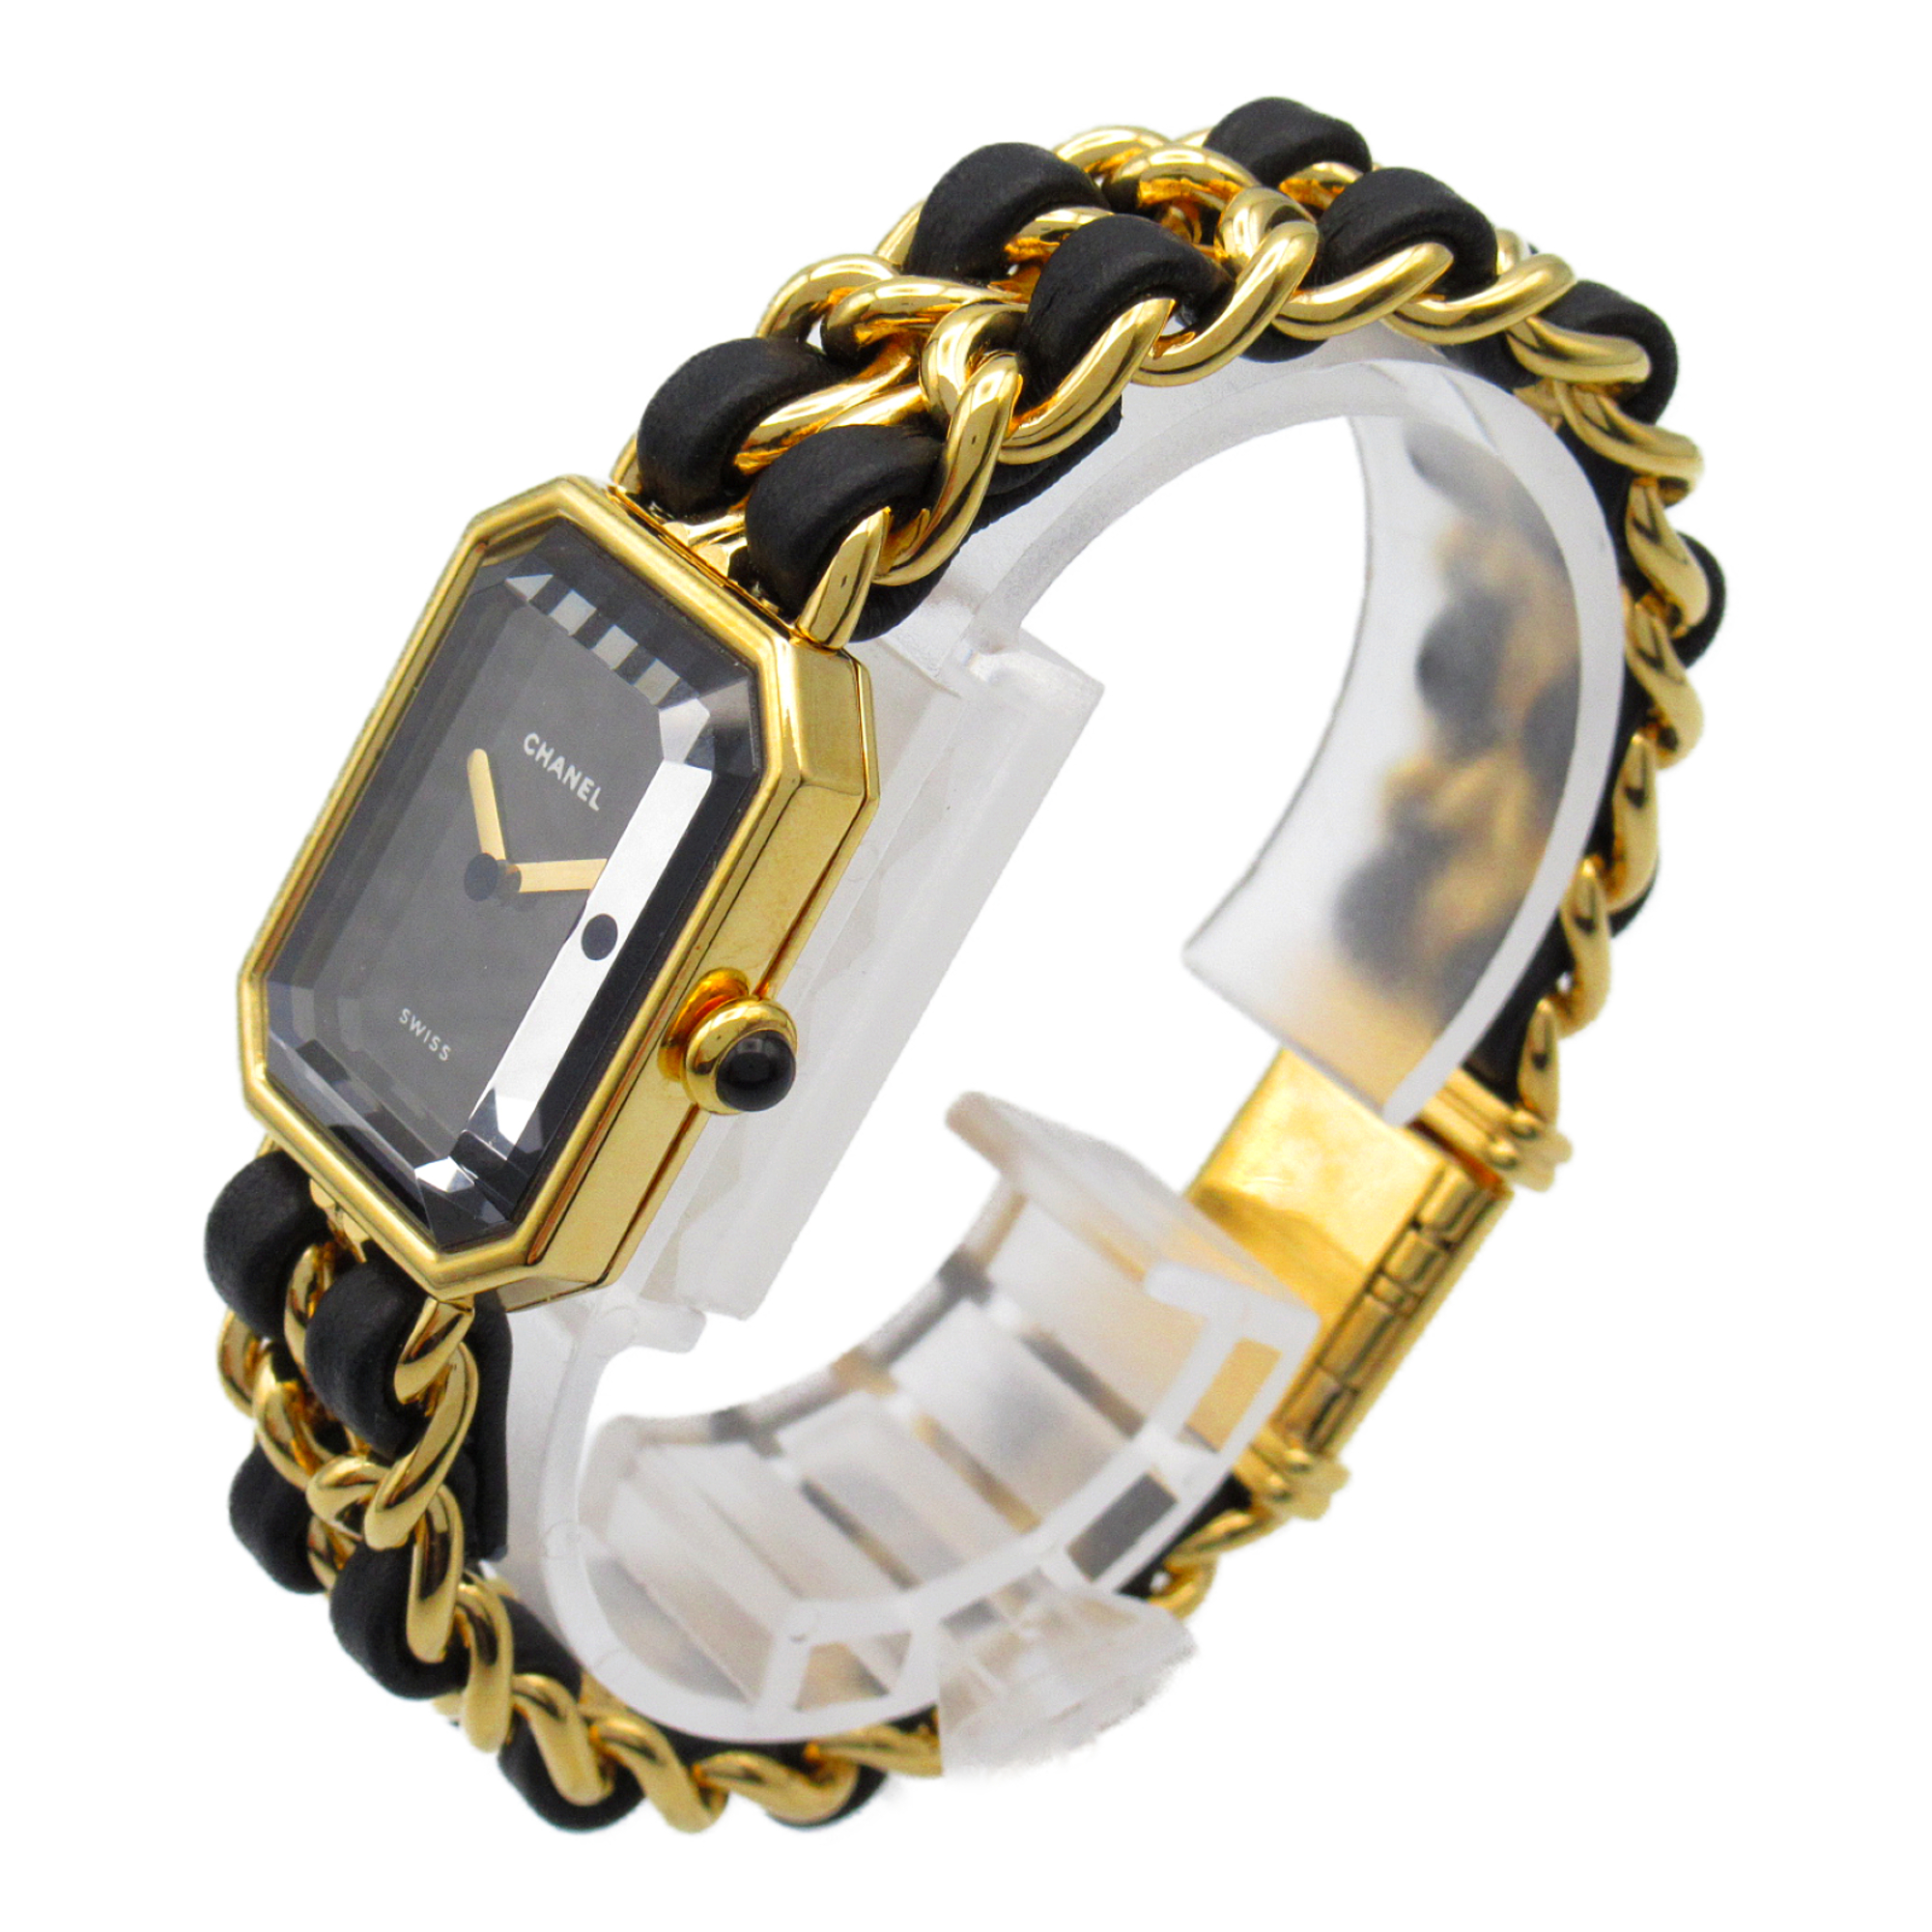 CHANEL Premiere Wrist Watch H0001 Quartz Black  Gold Plated Leather belt H0001